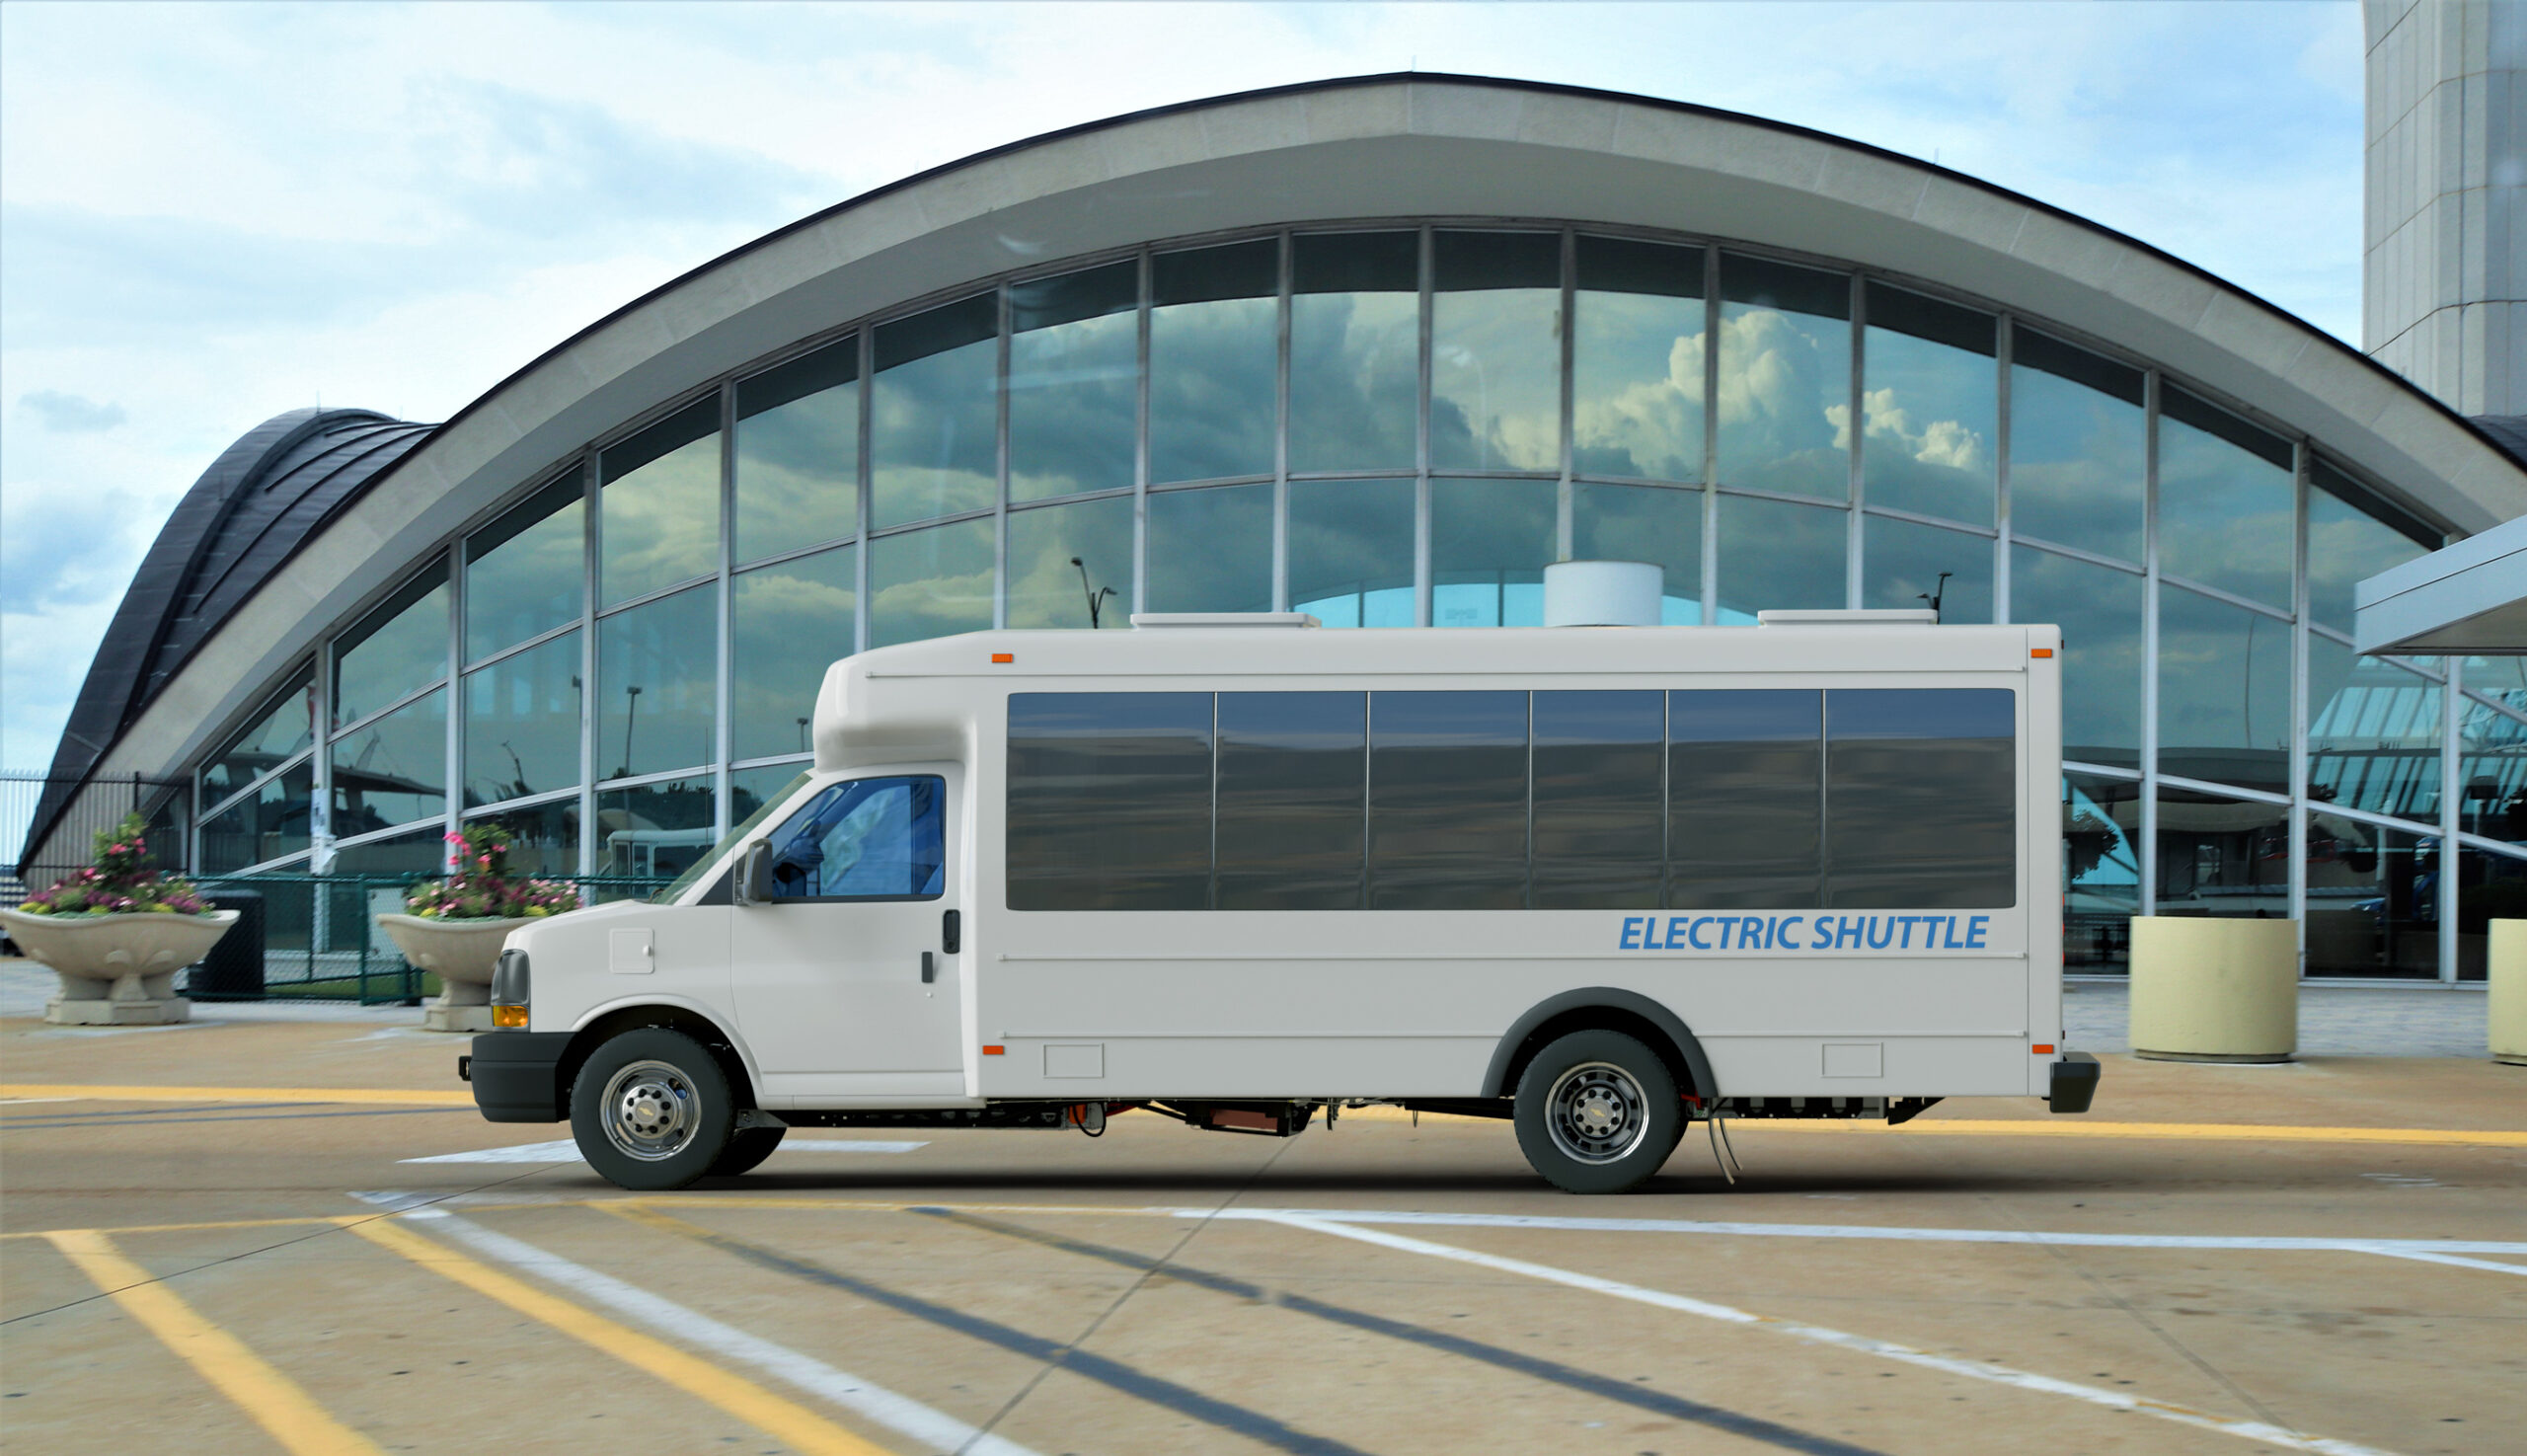 Lightning eMotors’ electric shuttle buses will provide emissions-free inter-terminal transportation at St. Louis Lambert International Airport